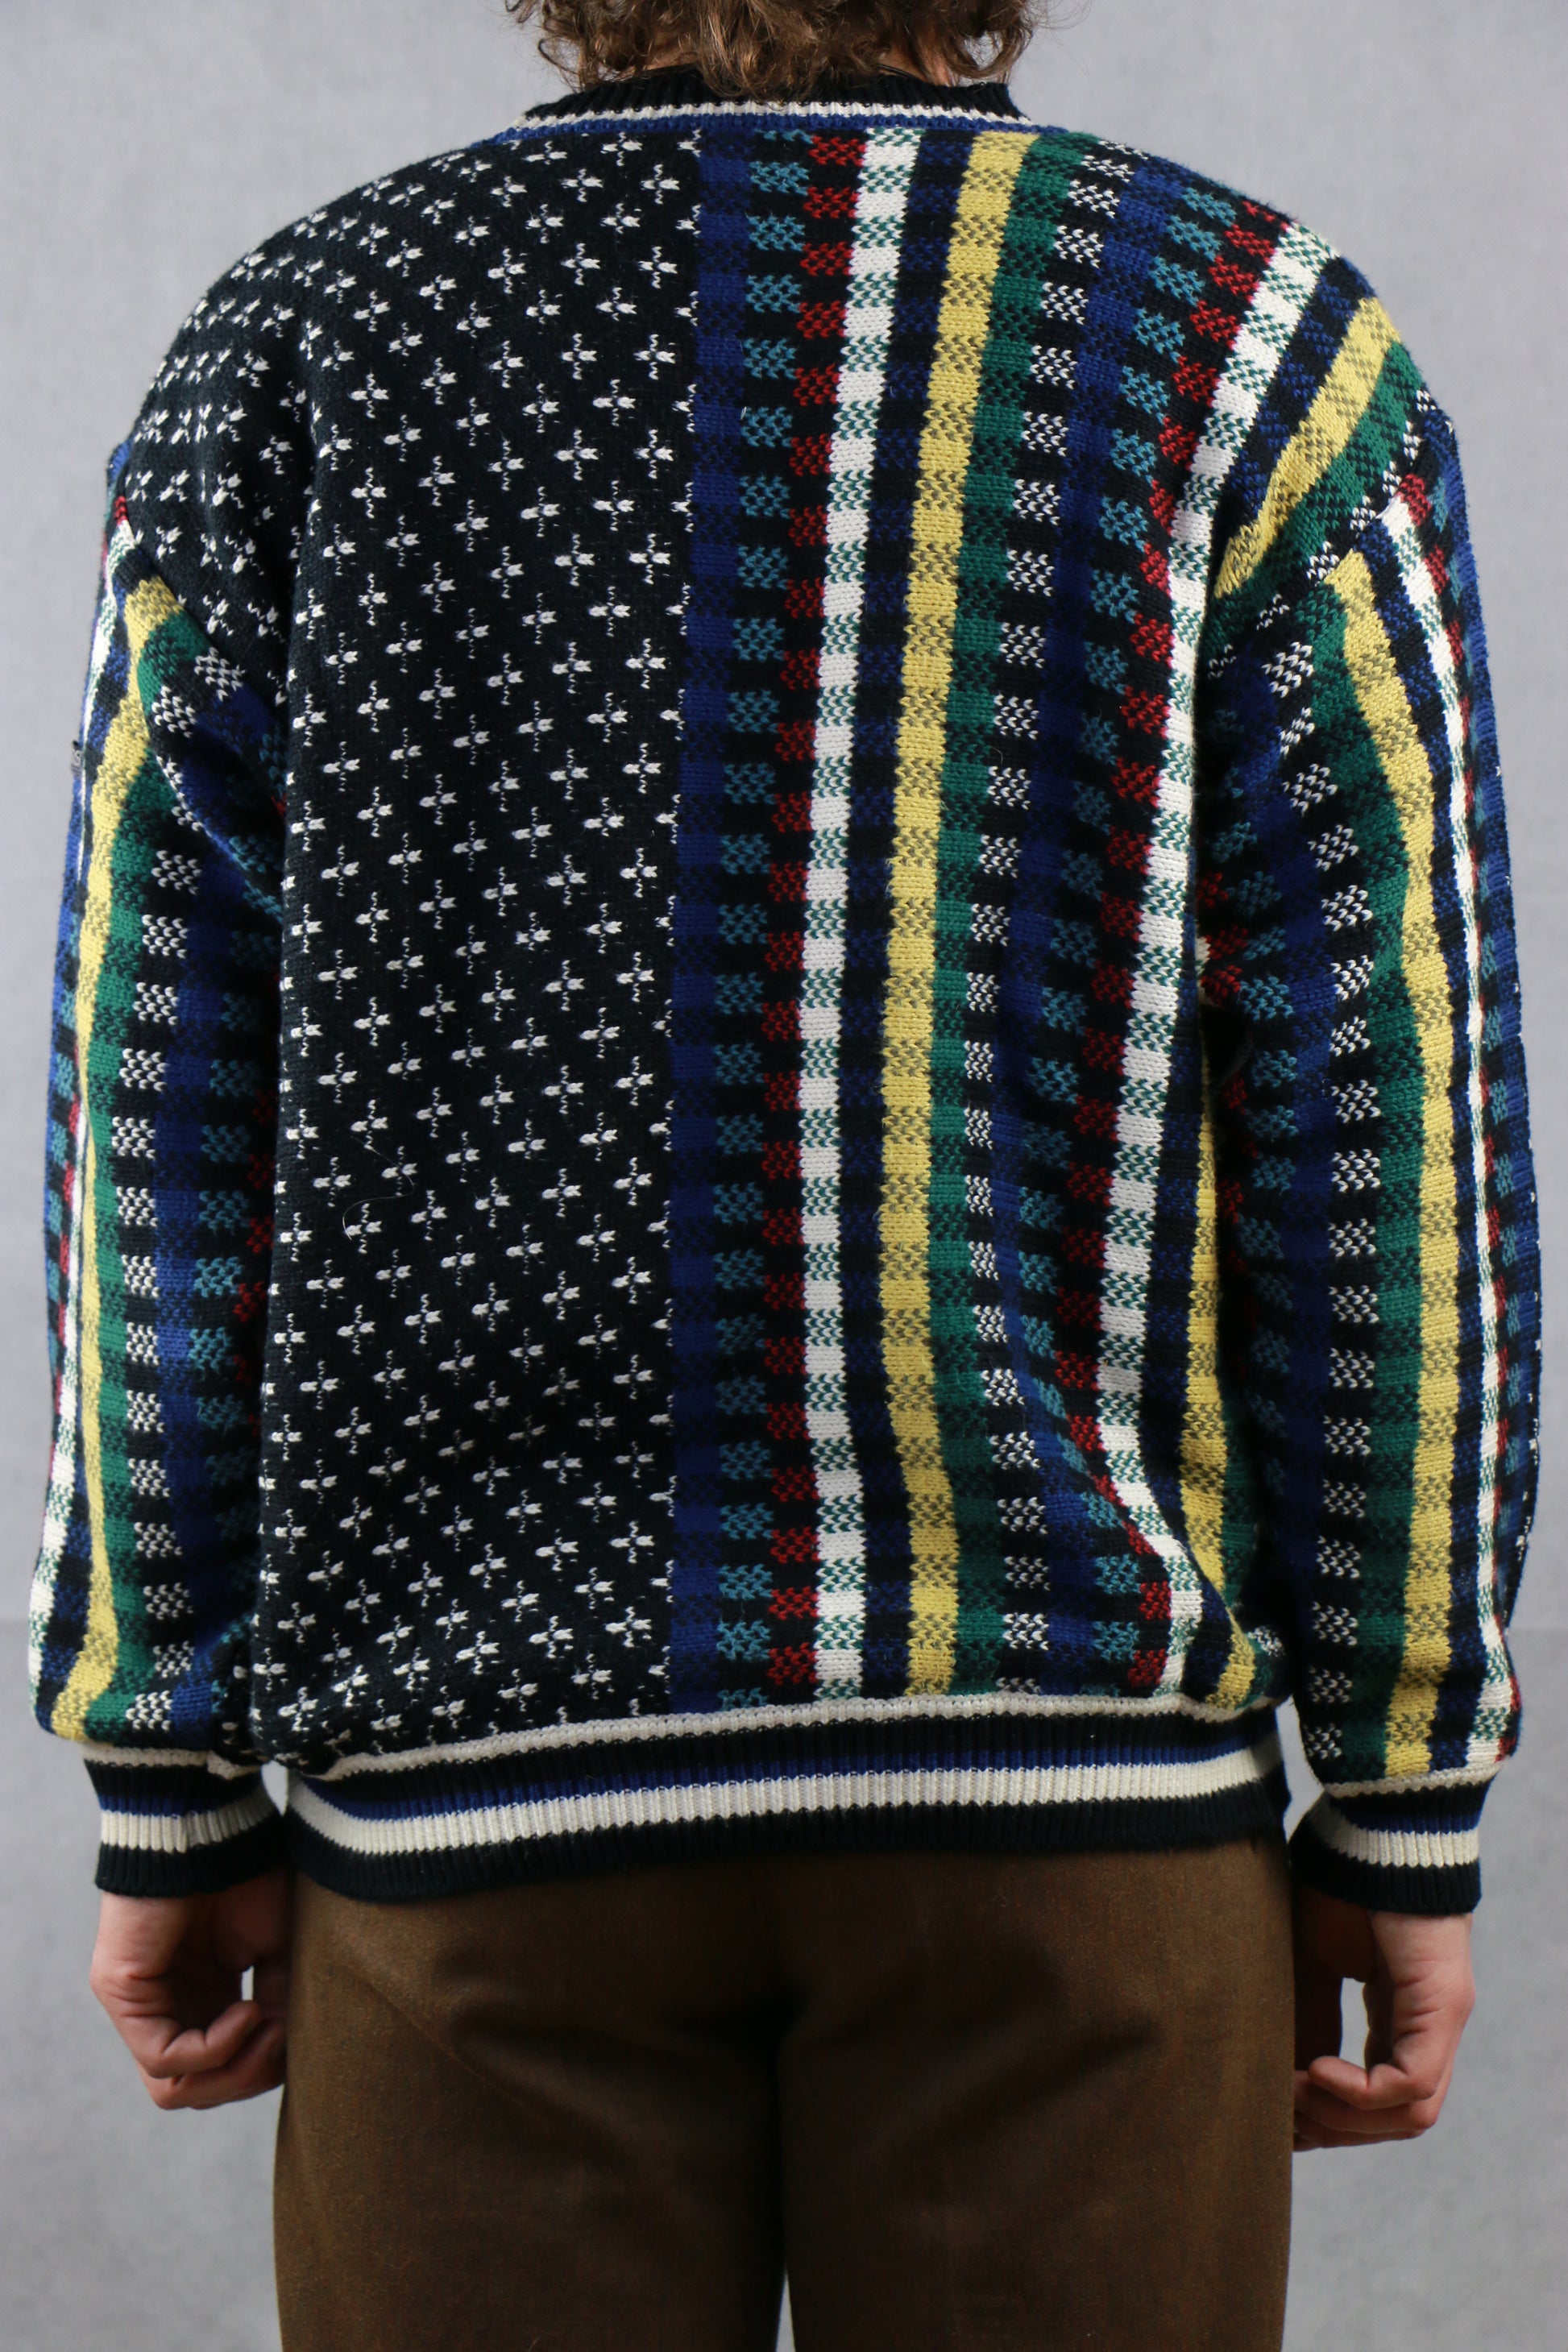 Hugo Boss Sweater abstract, clochard92.com